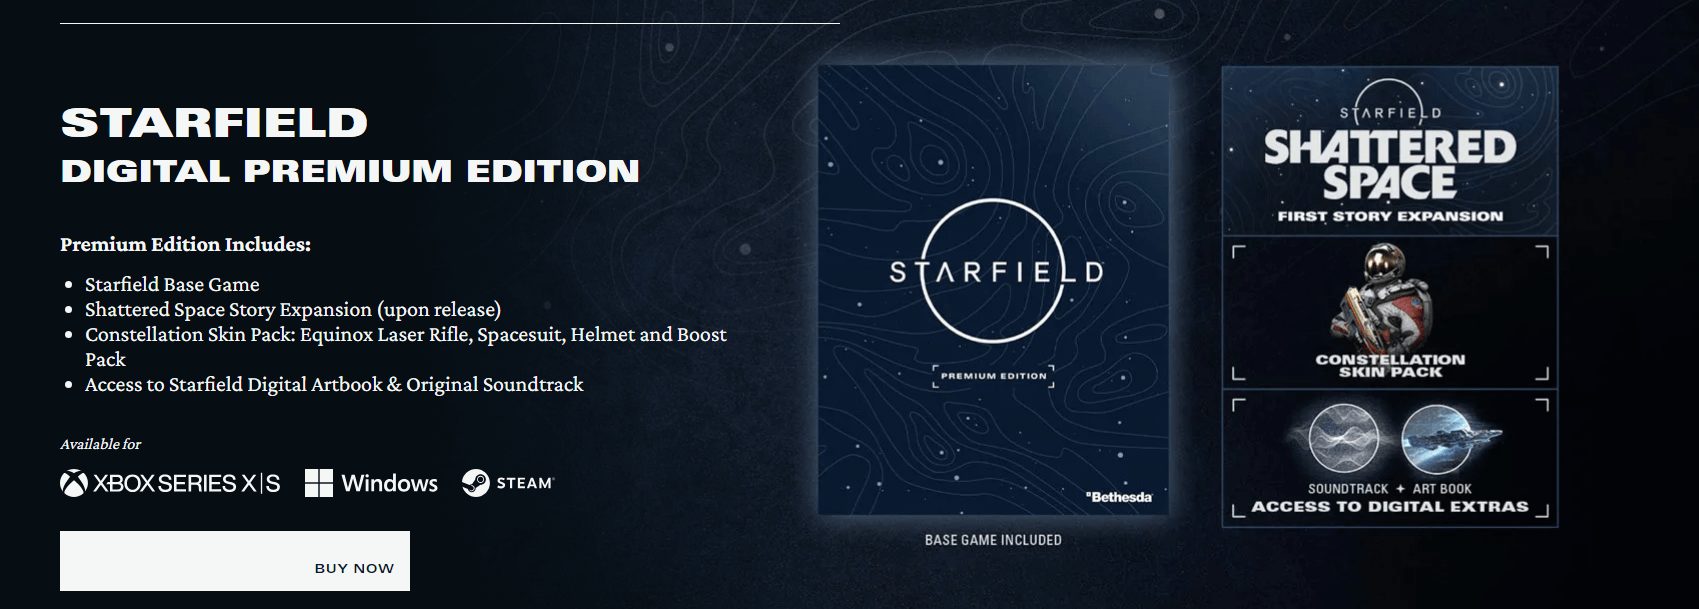 Starfield's Digital Premium Edition